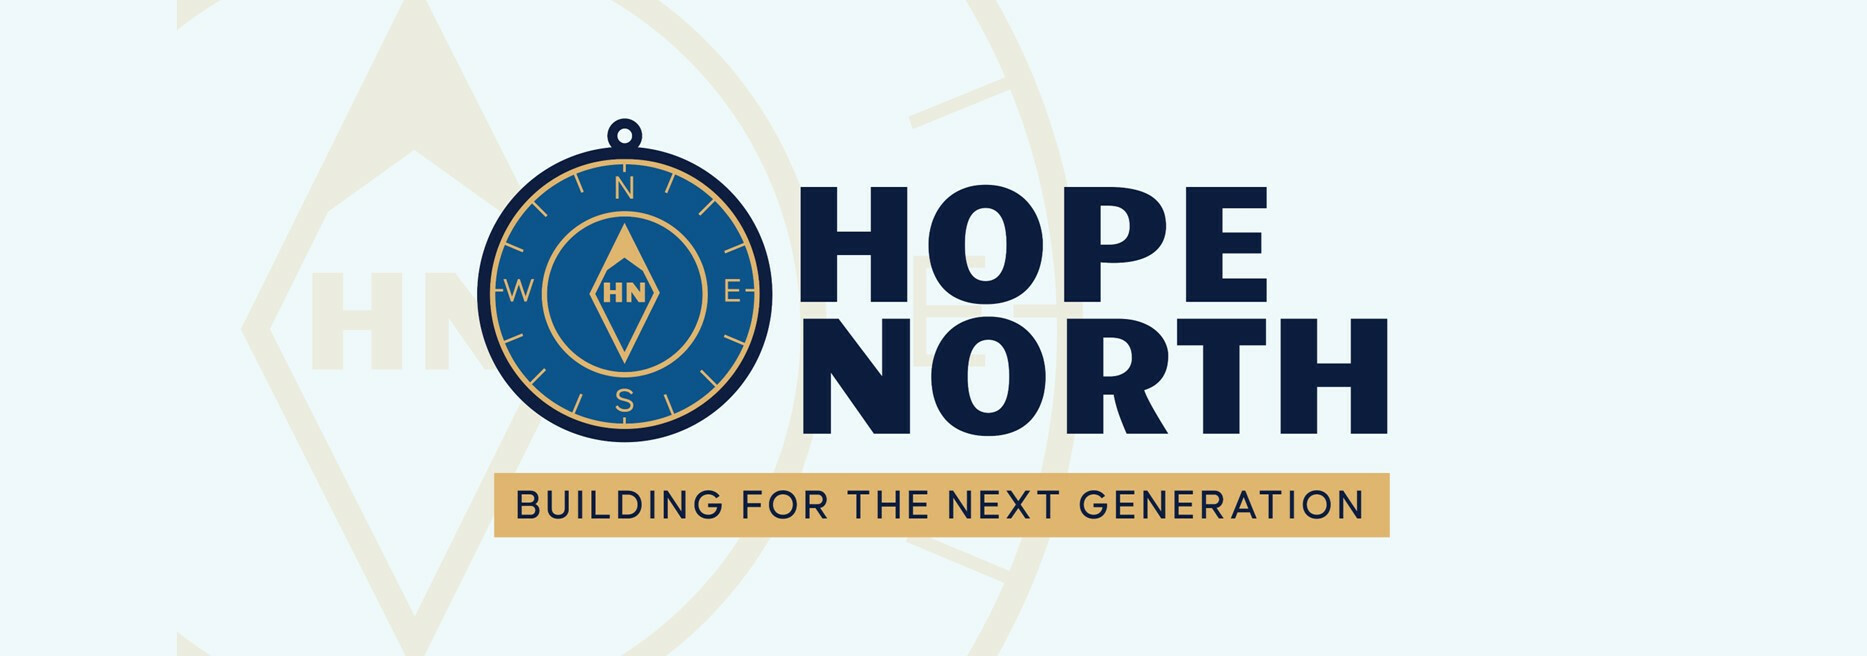 hope north page rotator